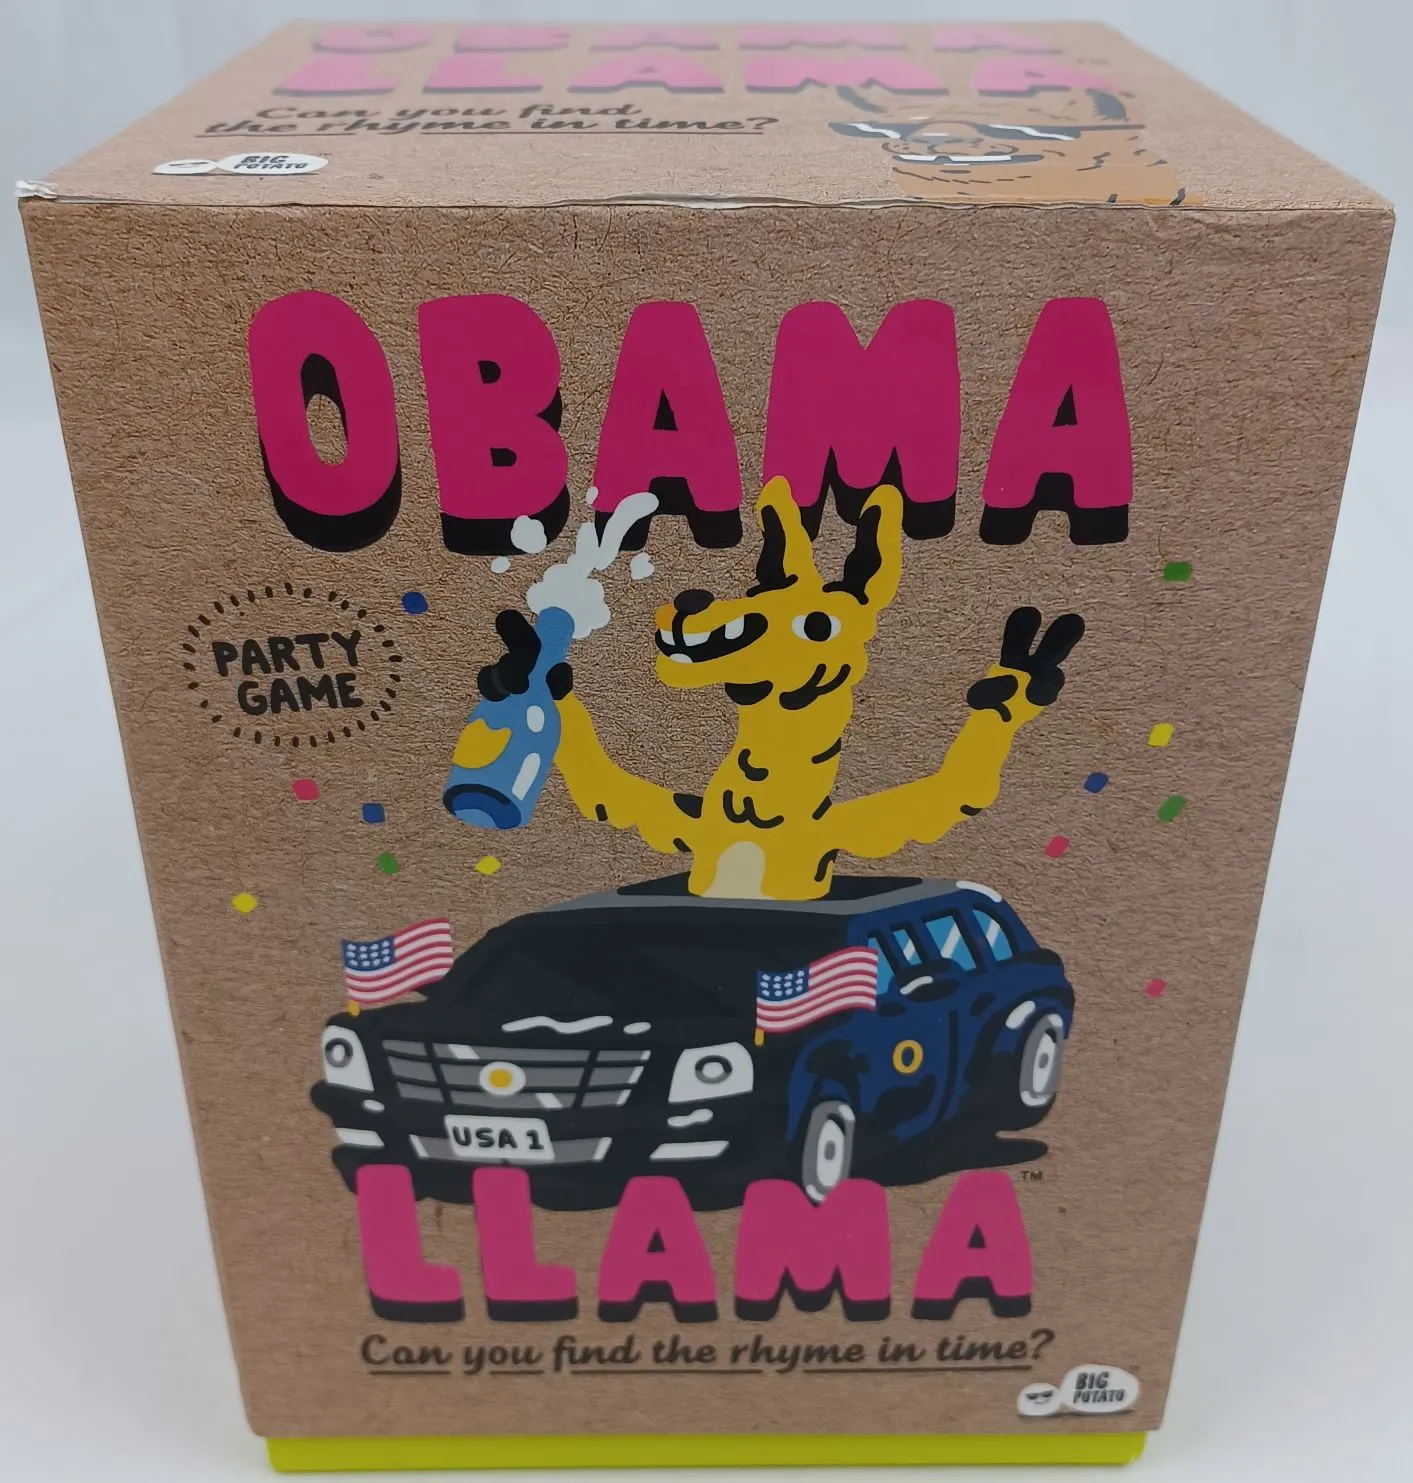 Party Games Obama Llama Big Potato Games Colour Brain Weird Things & More